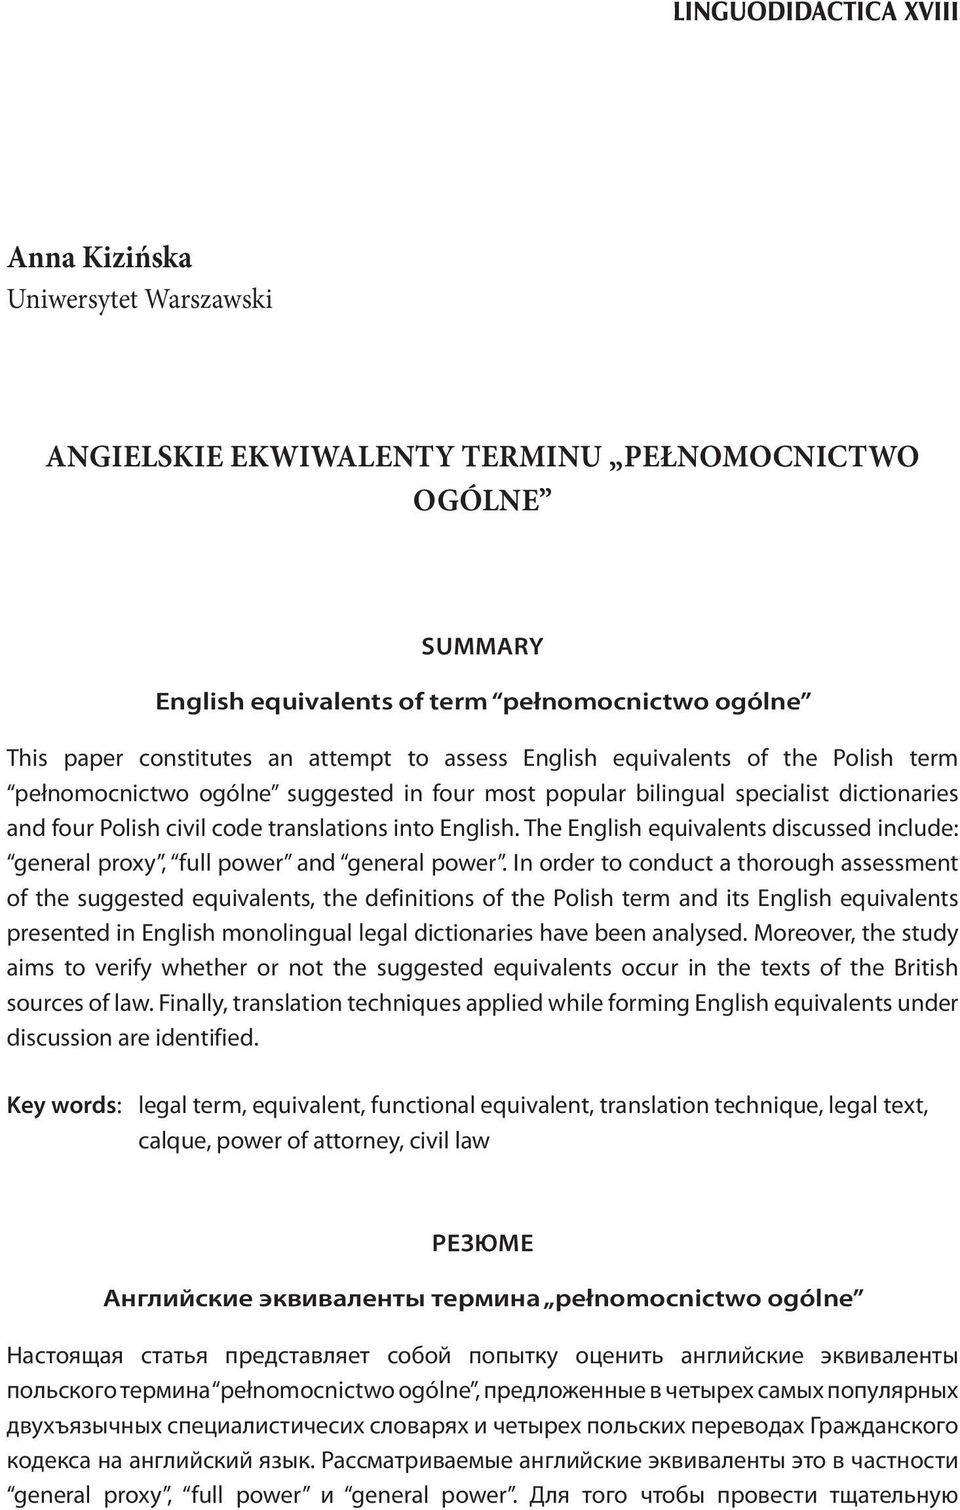 Anna Kizińska. Uniwersytet Warszawski. Linguodidactica XVIII. Summary.  English equivalents of term pełnomocnictwo ogólne - PDF Free Download